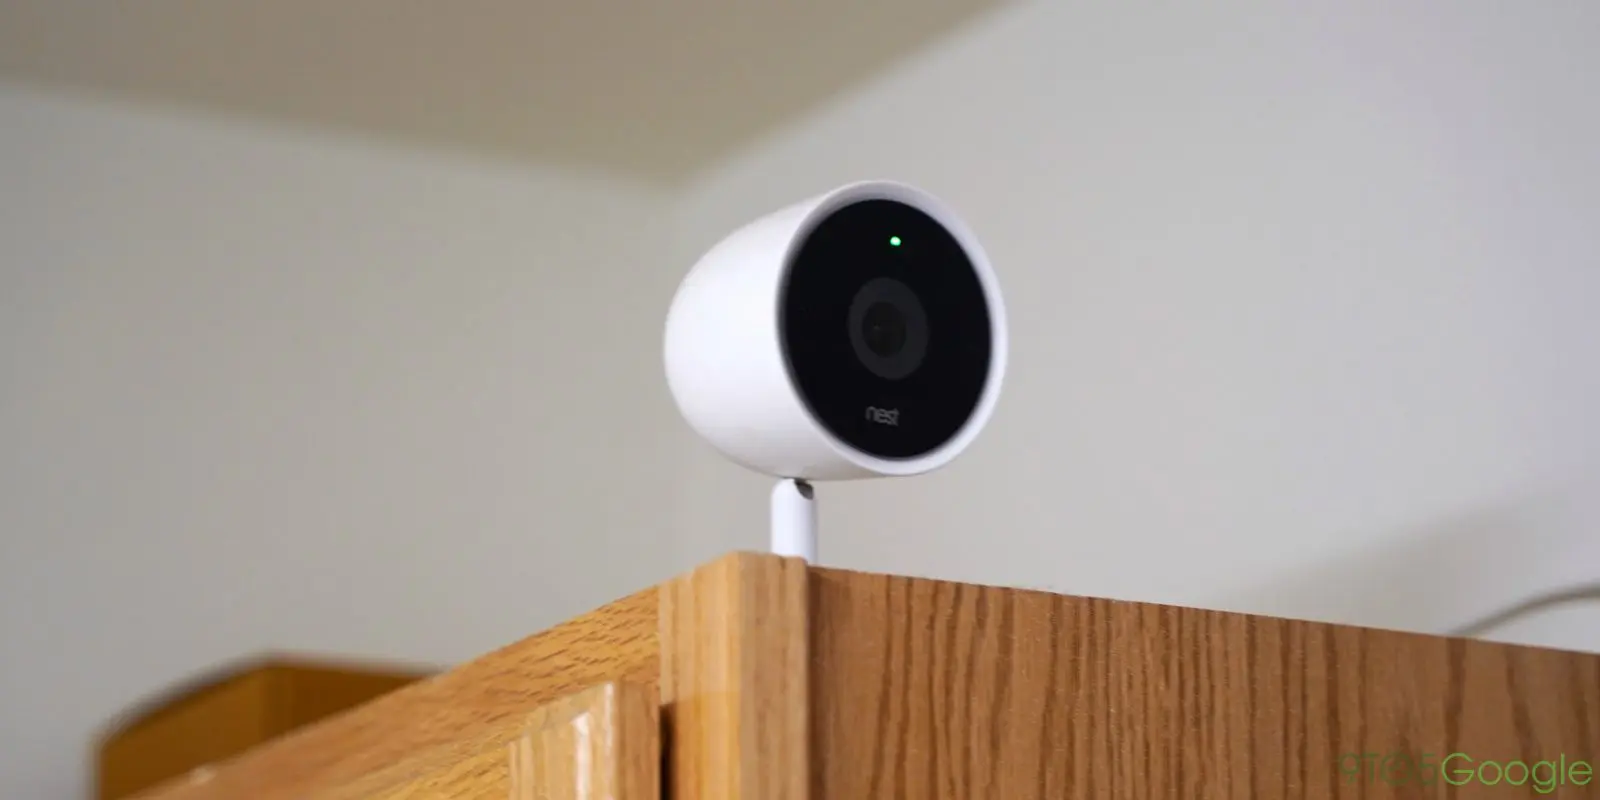 Google Nest advierte sobre posible espionaje a través de cámaras de seguridad